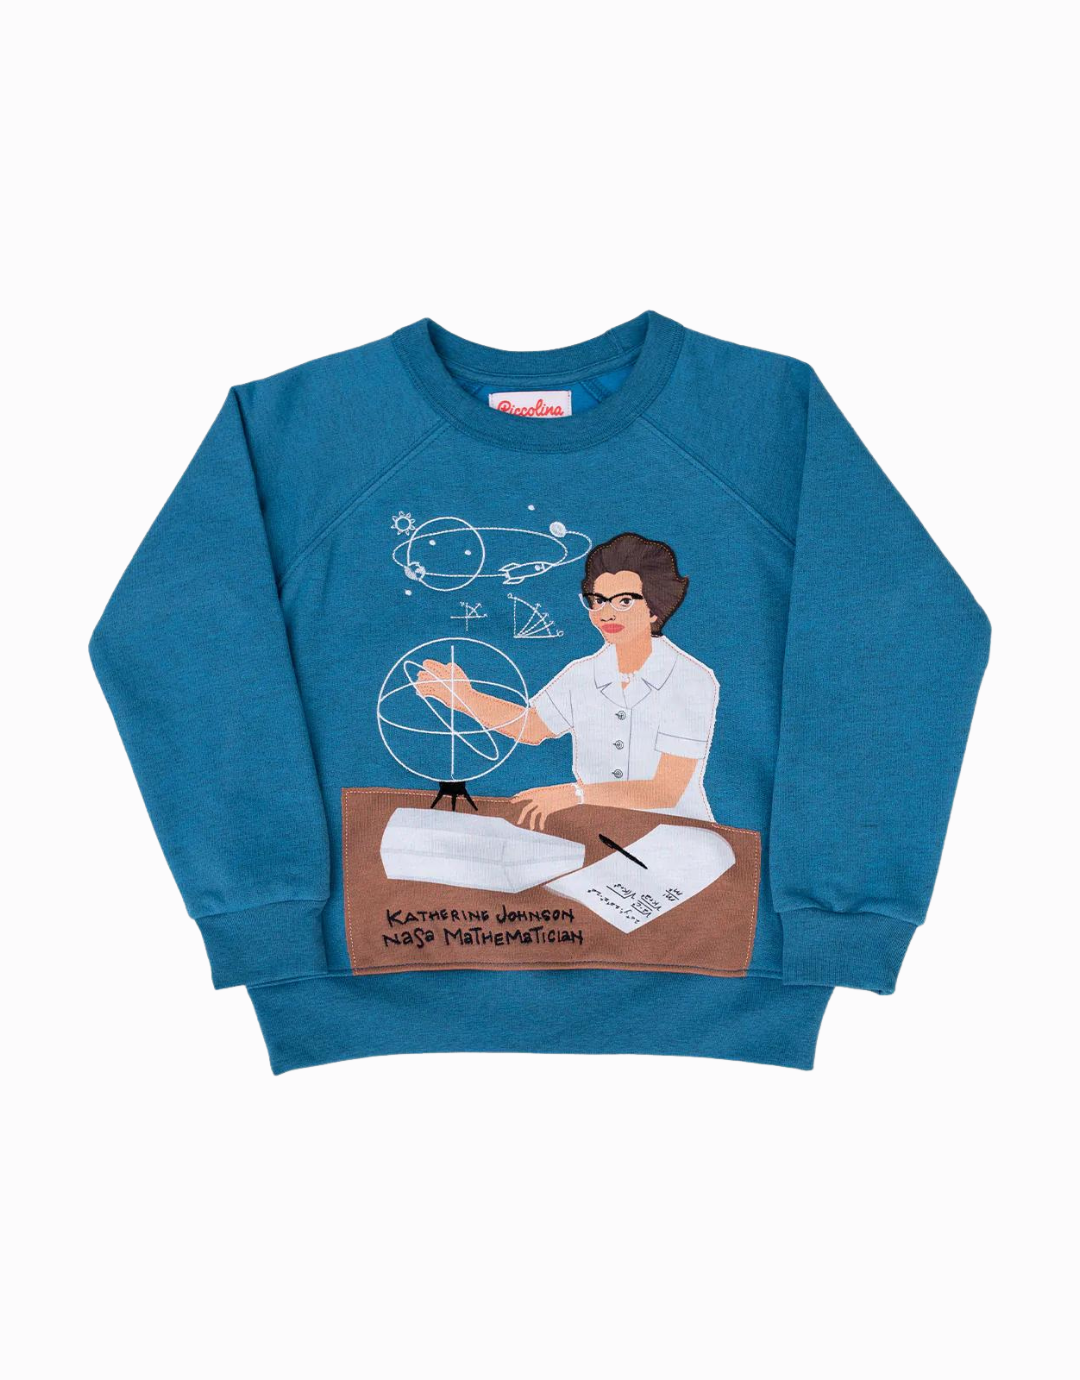 Katherine Johnson Trailblazer Sweatshirt